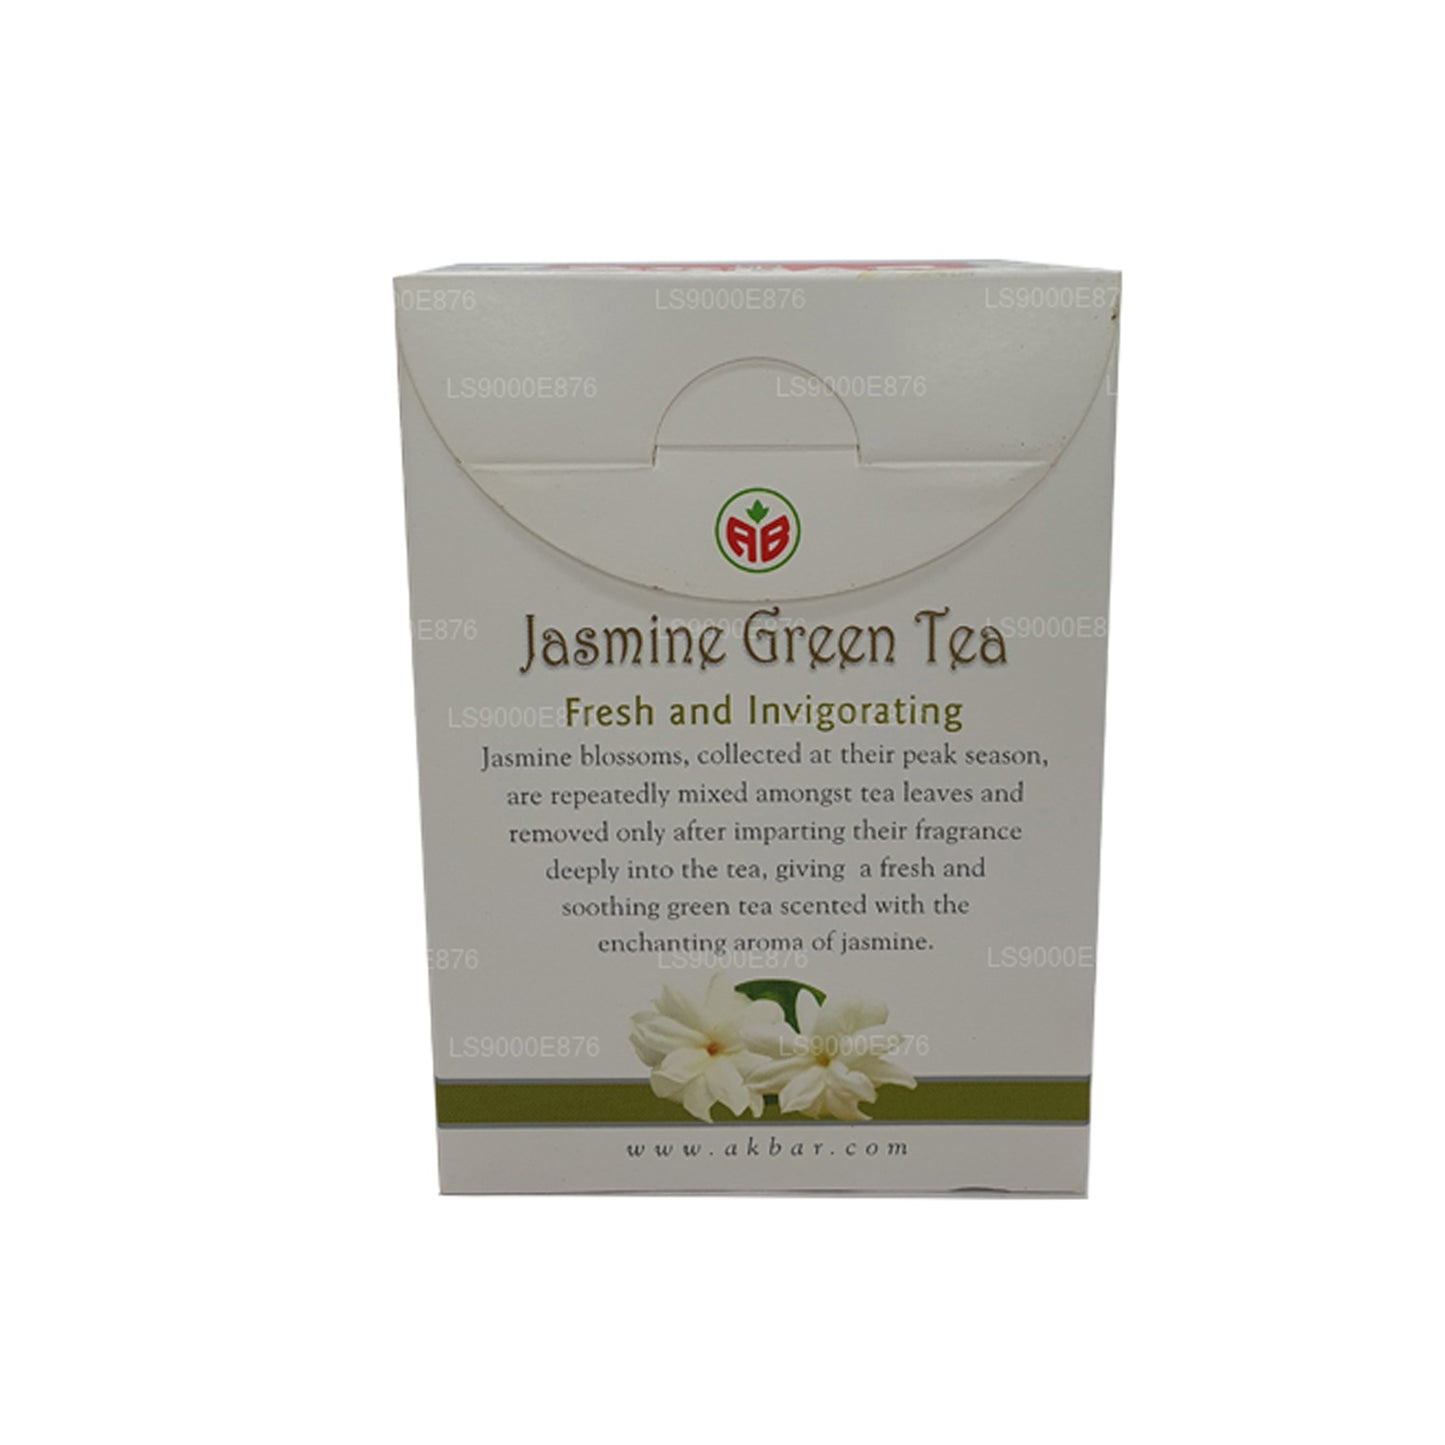 Akbar Jasmine Green Tea (36g) 20 Tea Bags